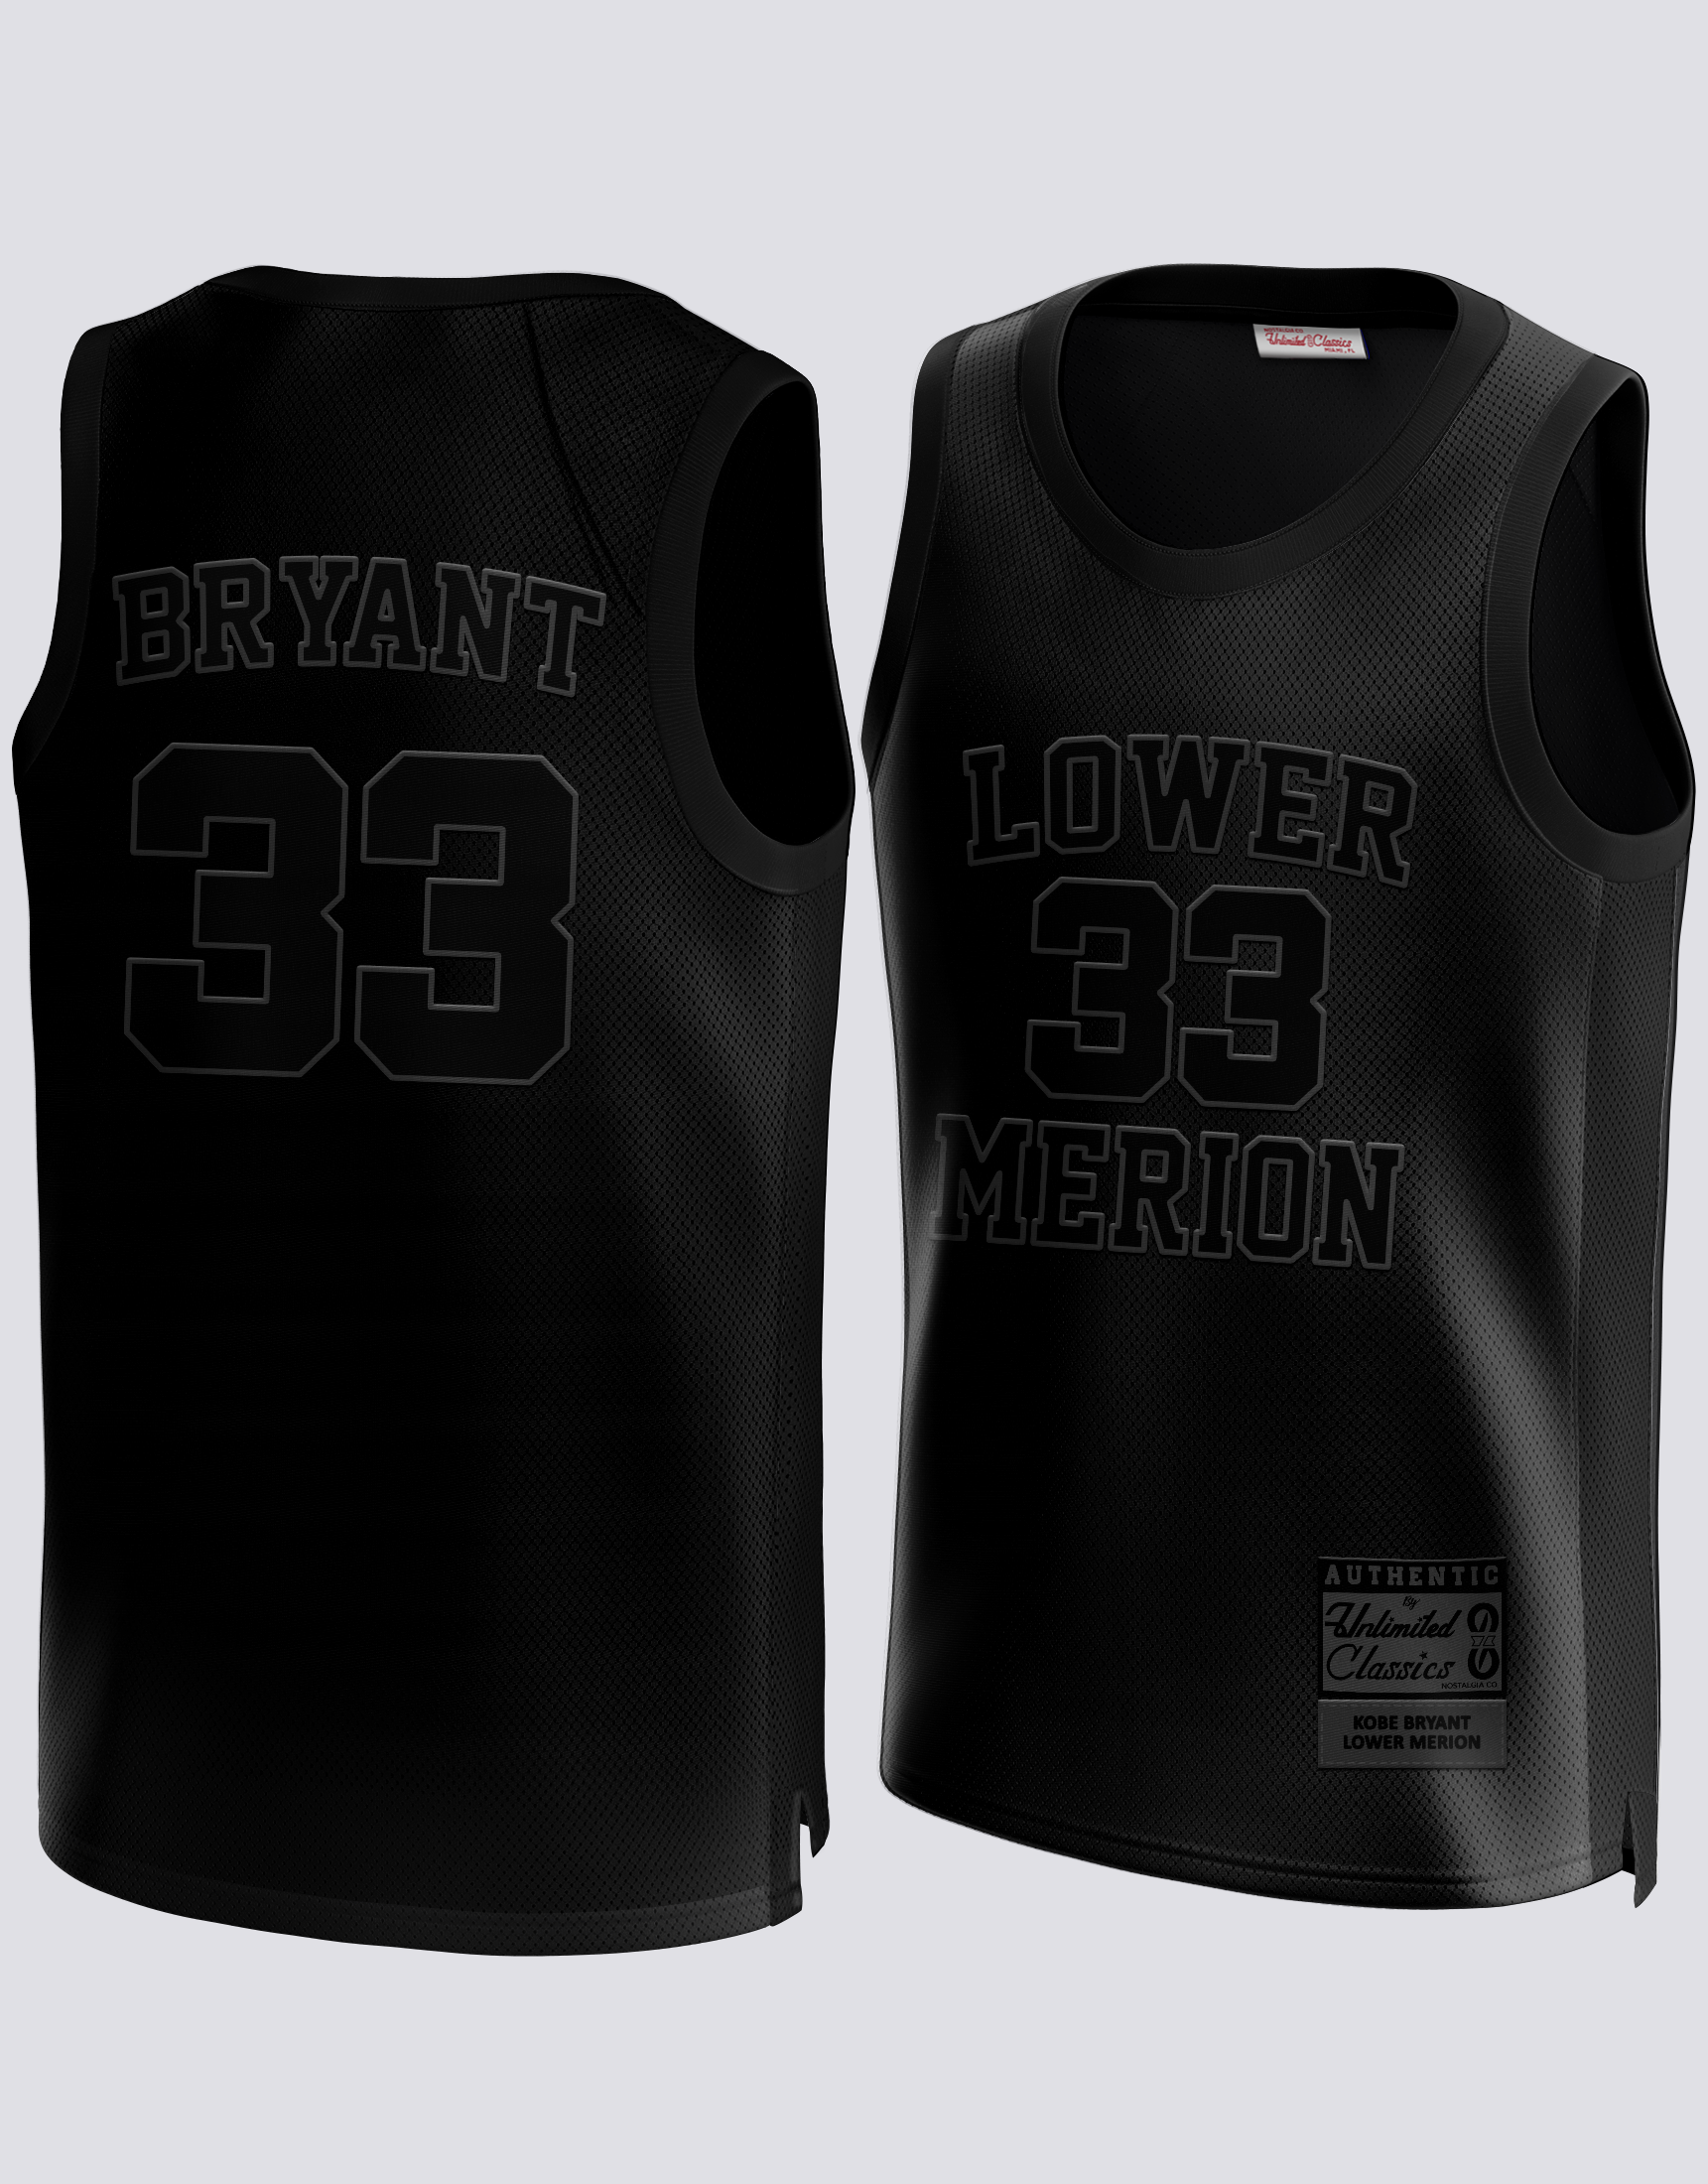 Camiseta Kobe Bryant #33 Lower Merion Edición Limitada 